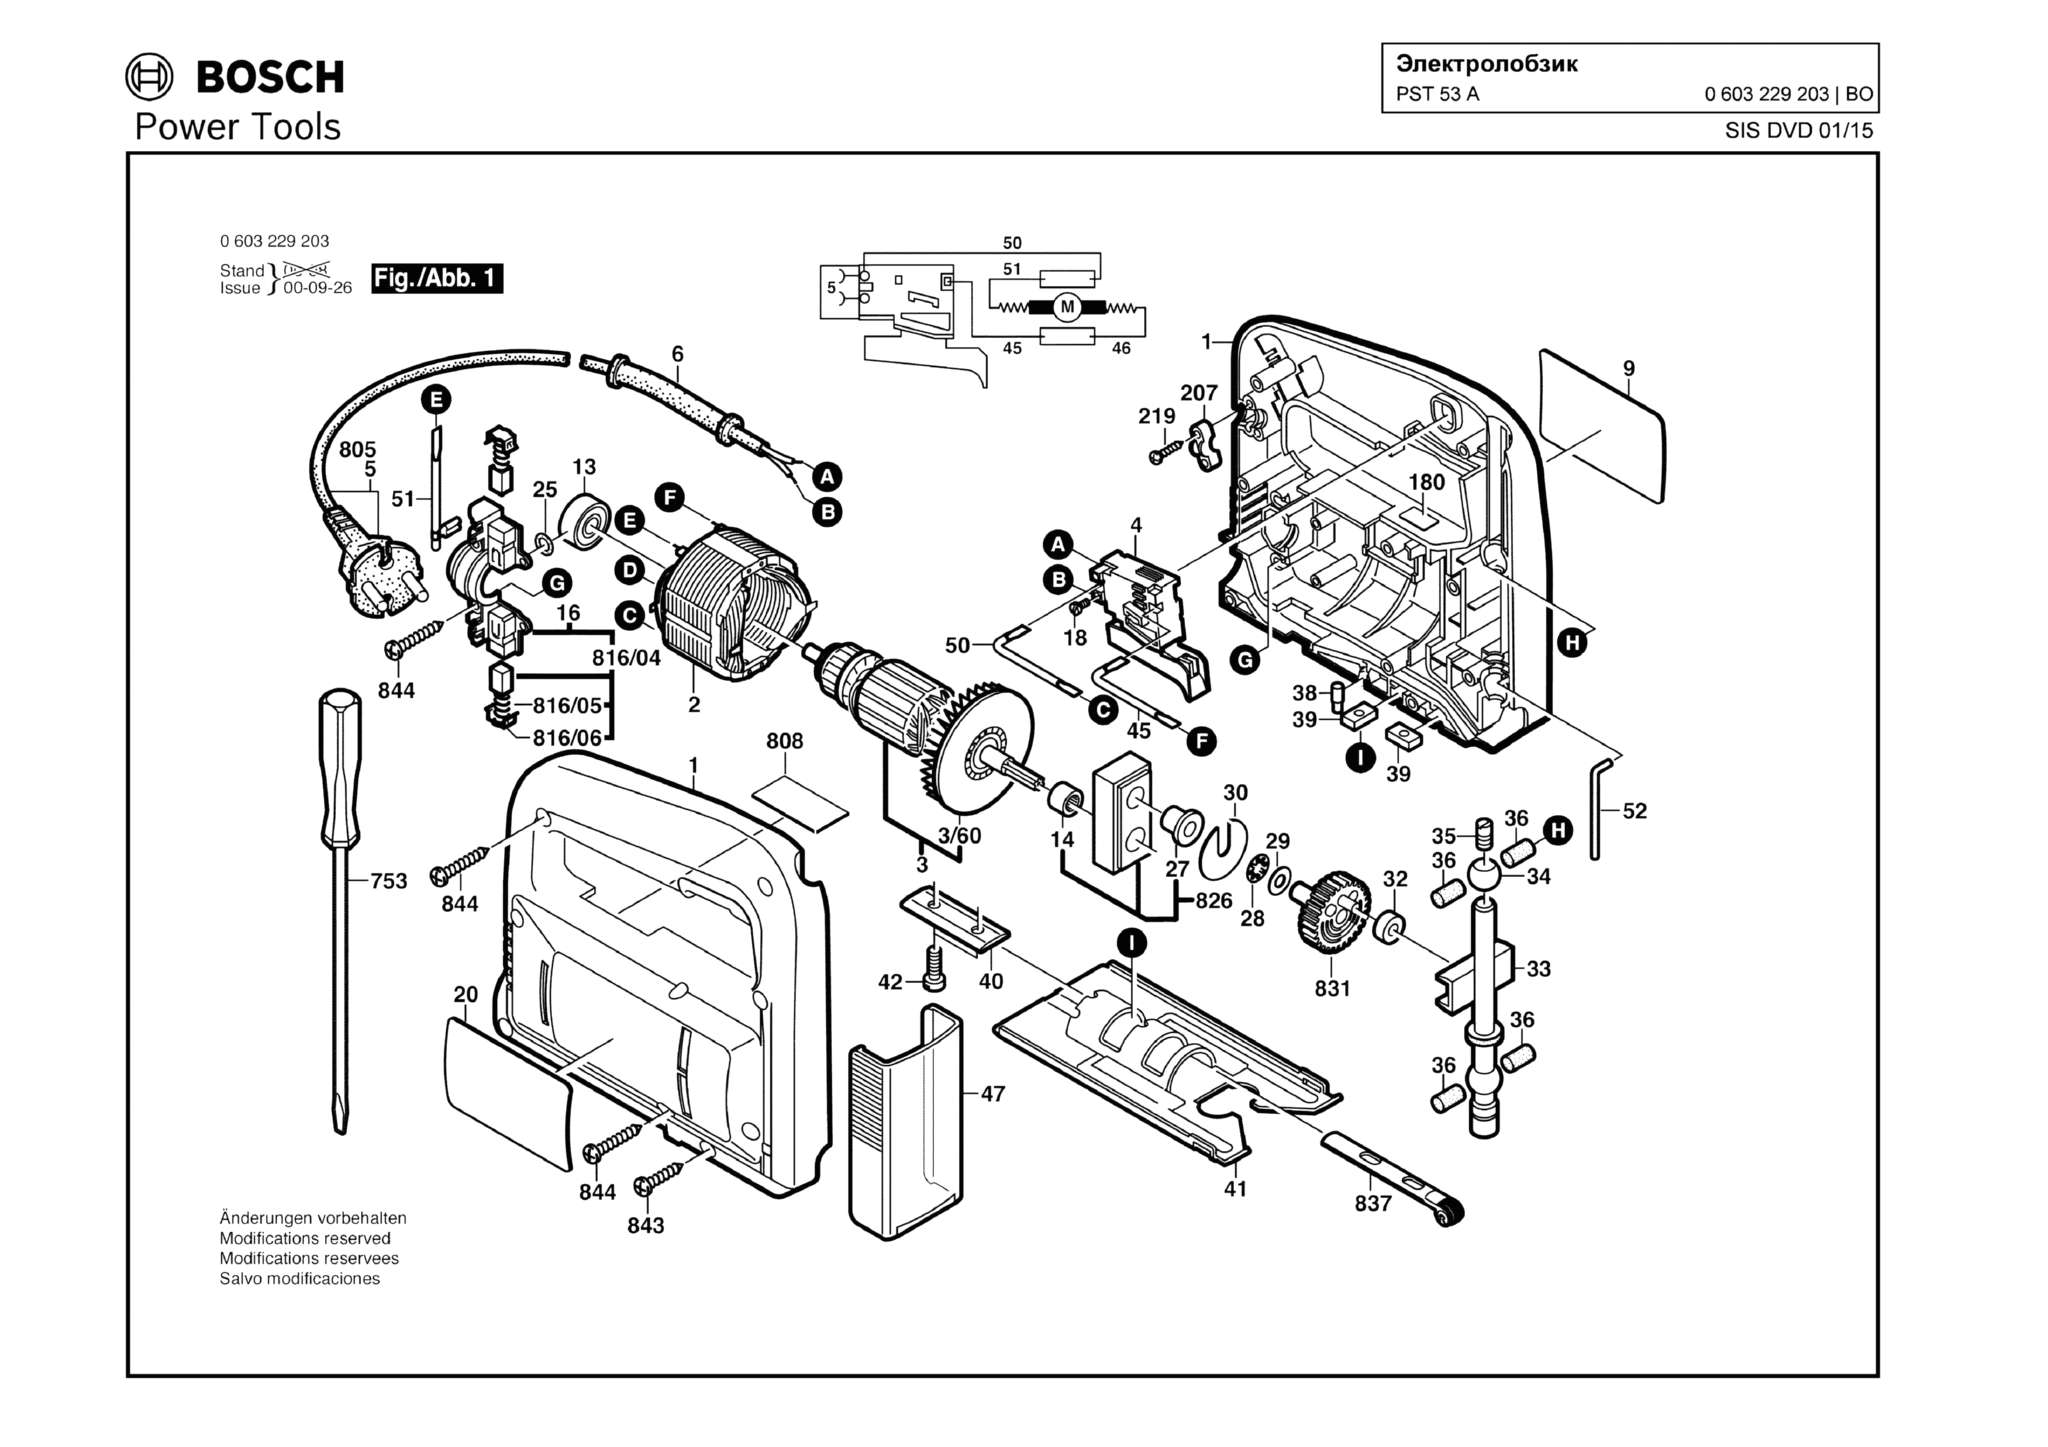 Запчасти, схема и деталировка Bosch PST 53 A (ТИП 0603229203)